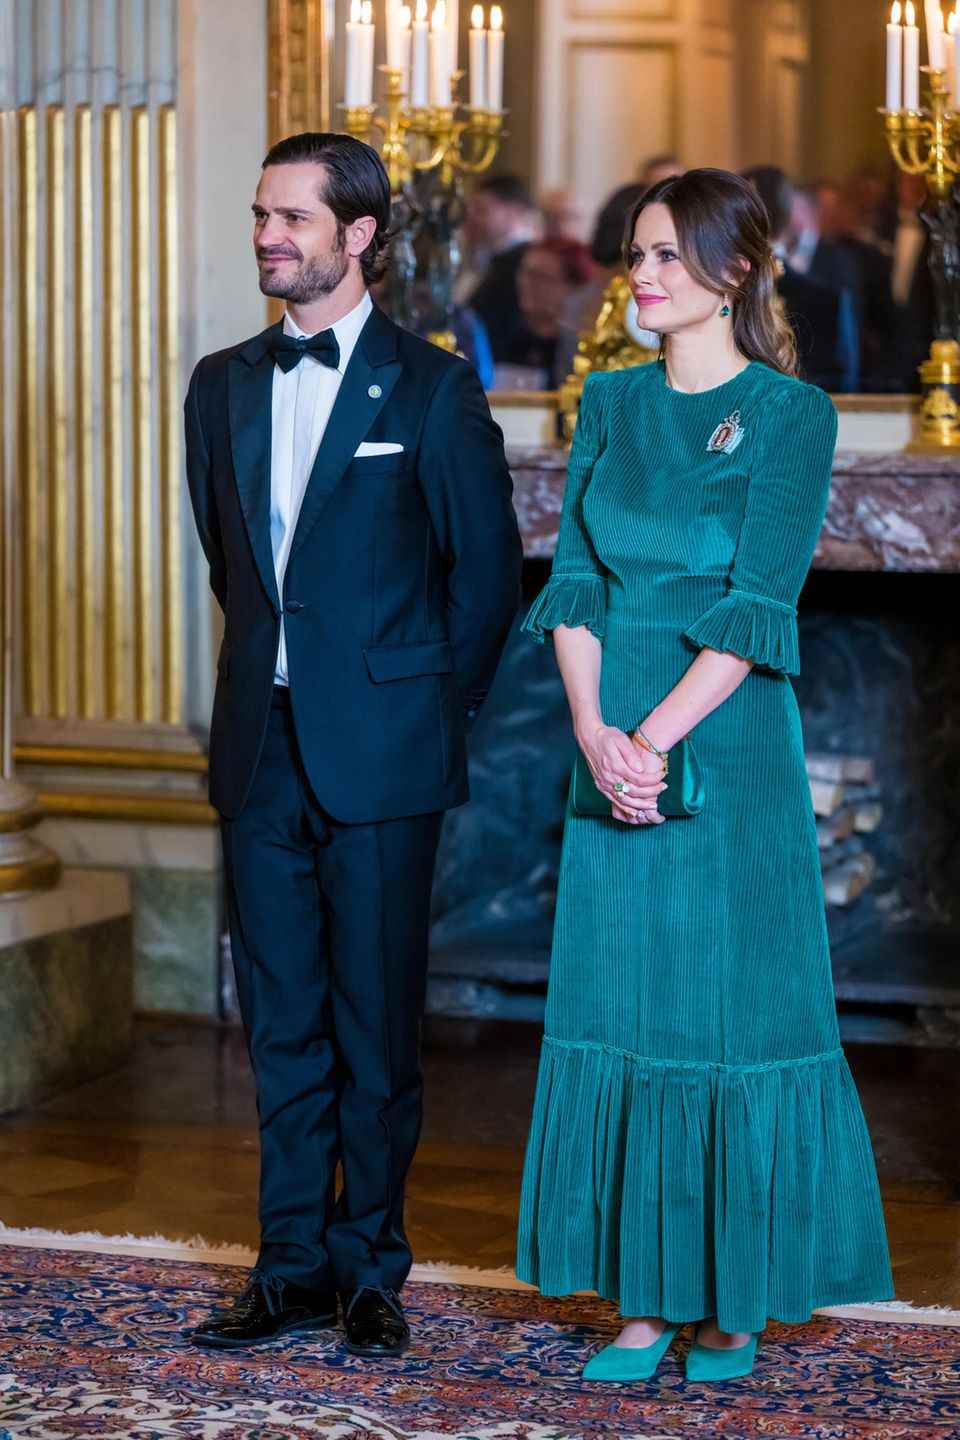 Prince Carl Philip and Princess Sofia at the Royal Palace in Stockholm.